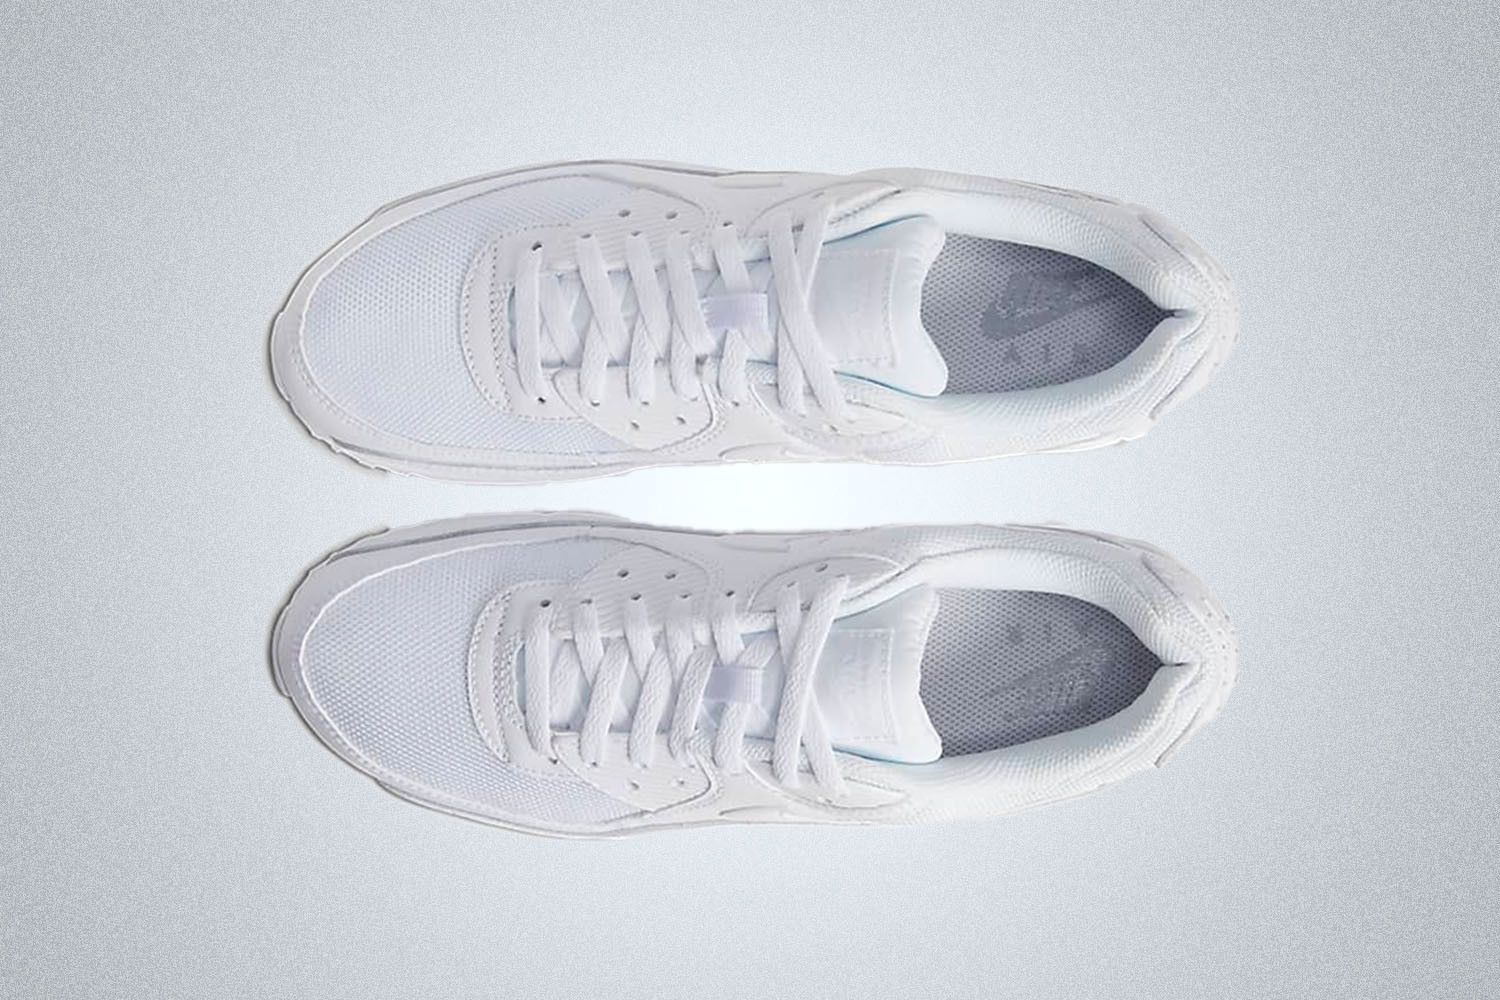 a white shoe on a light grey background